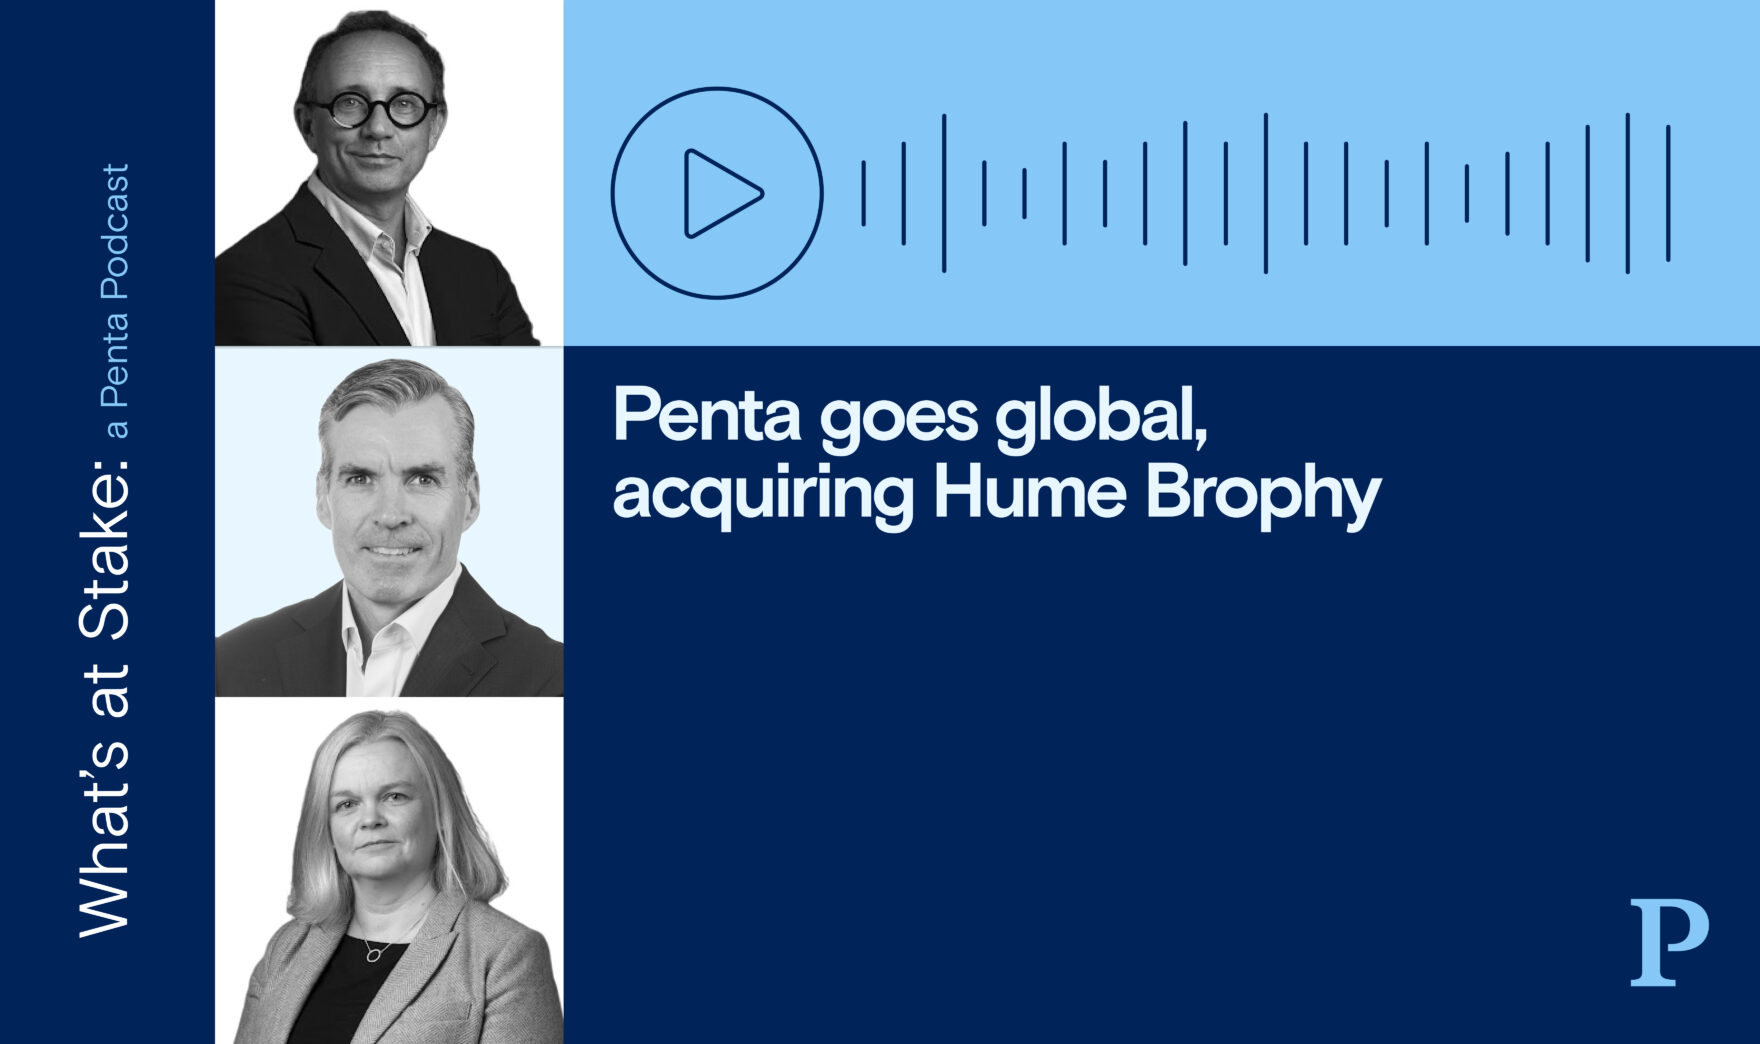 Penta goes global, acquiring Hume Brophy